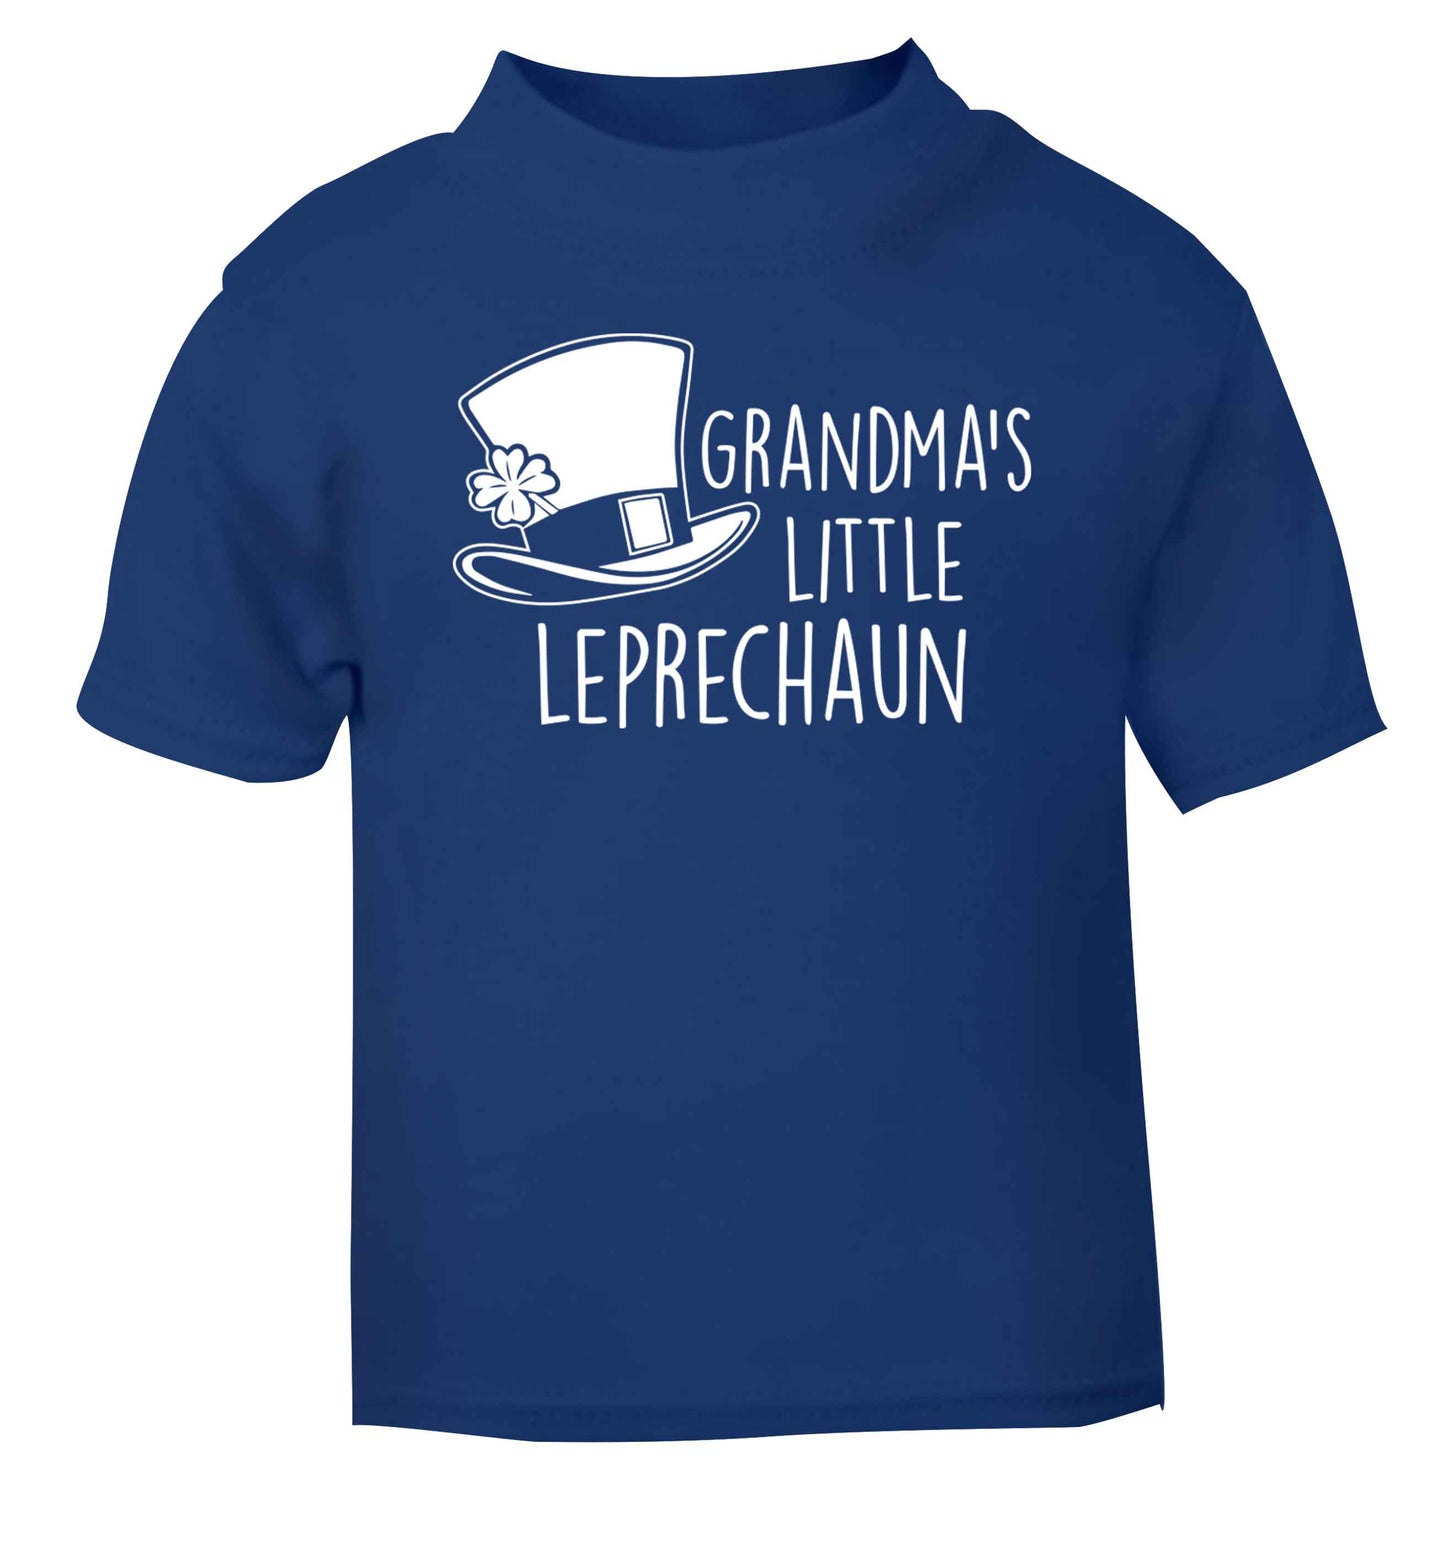 Grandma's little leprechaun blue baby toddler Tshirt 2 Years